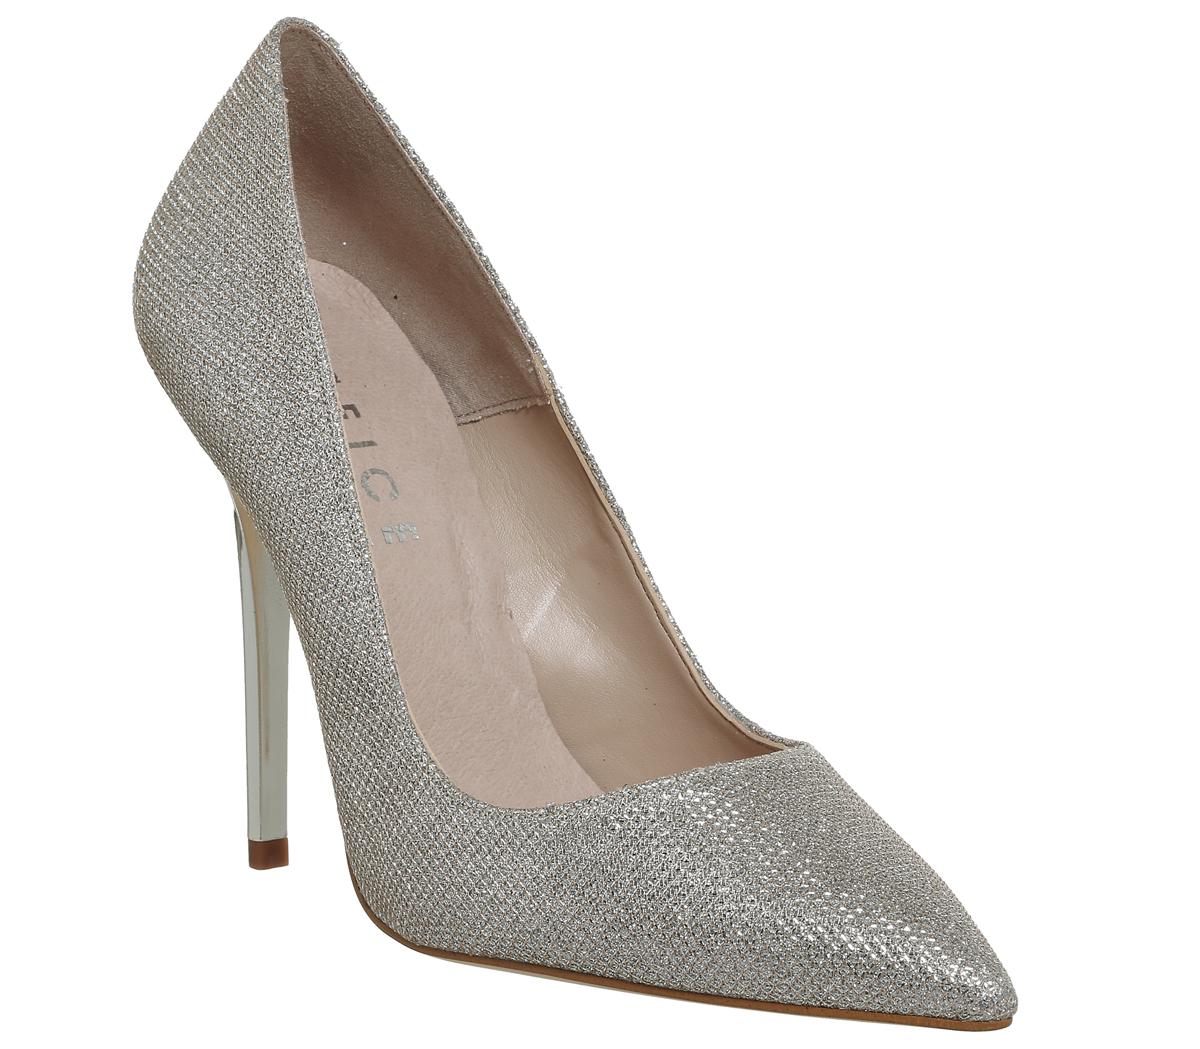 silver court heels